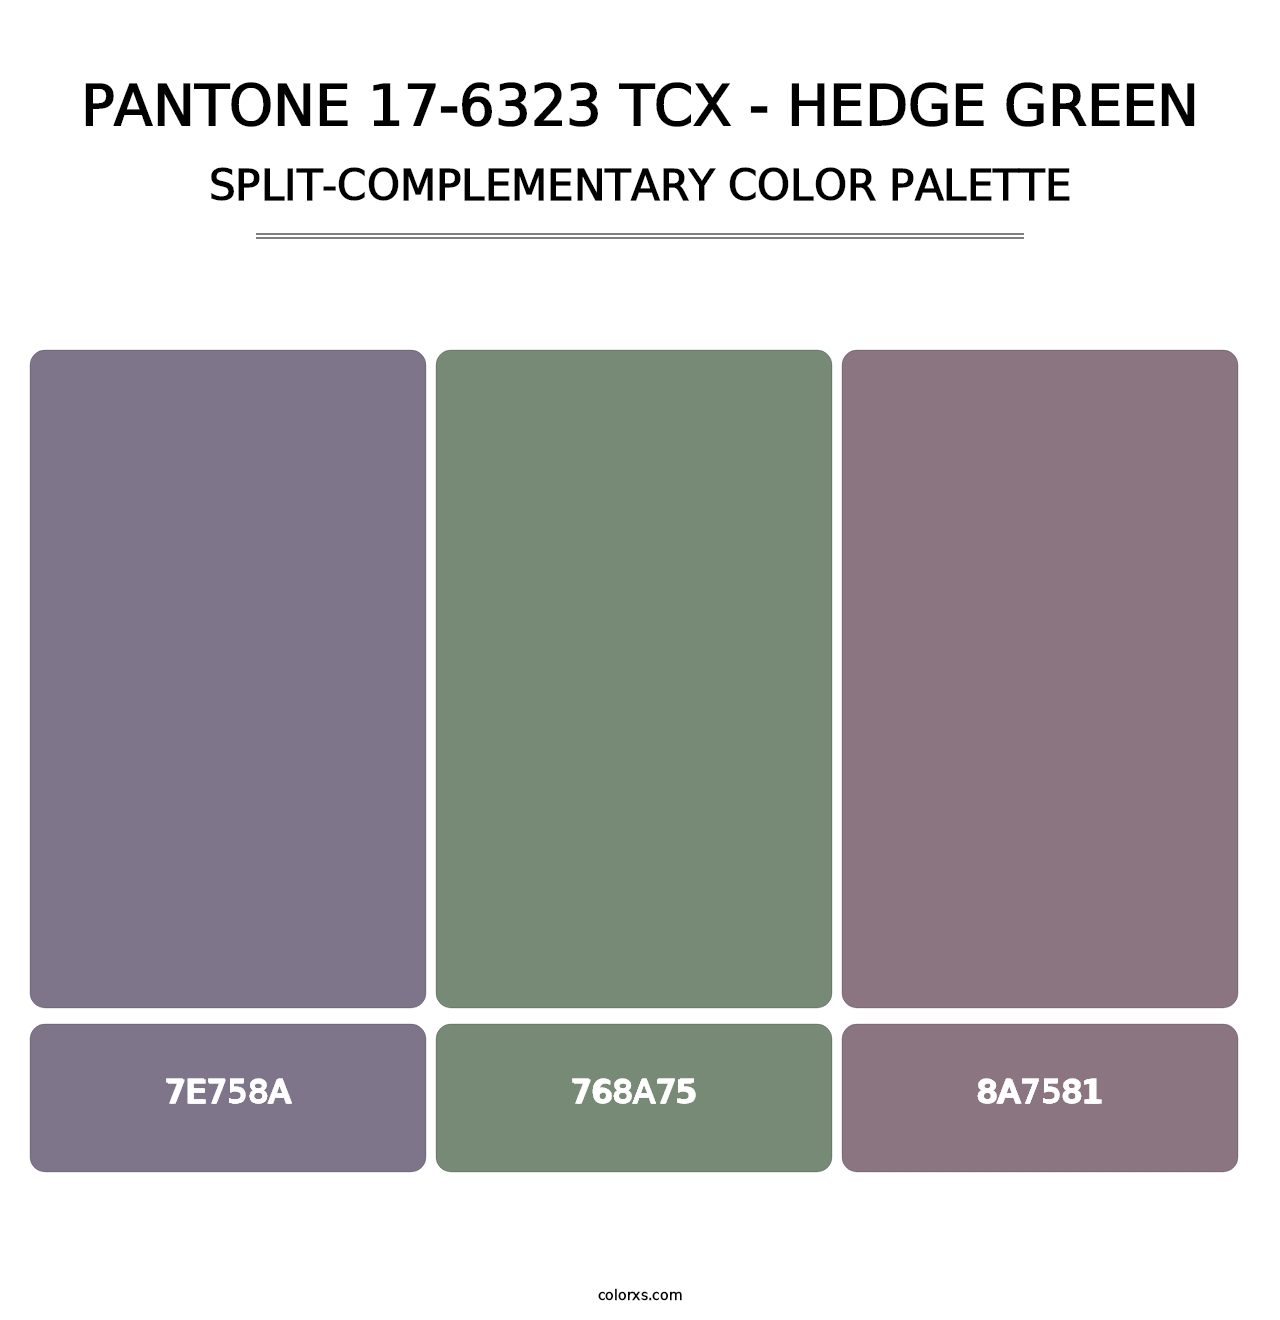 PANTONE 17-6323 TCX - Hedge Green - Split-Complementary Color Palette